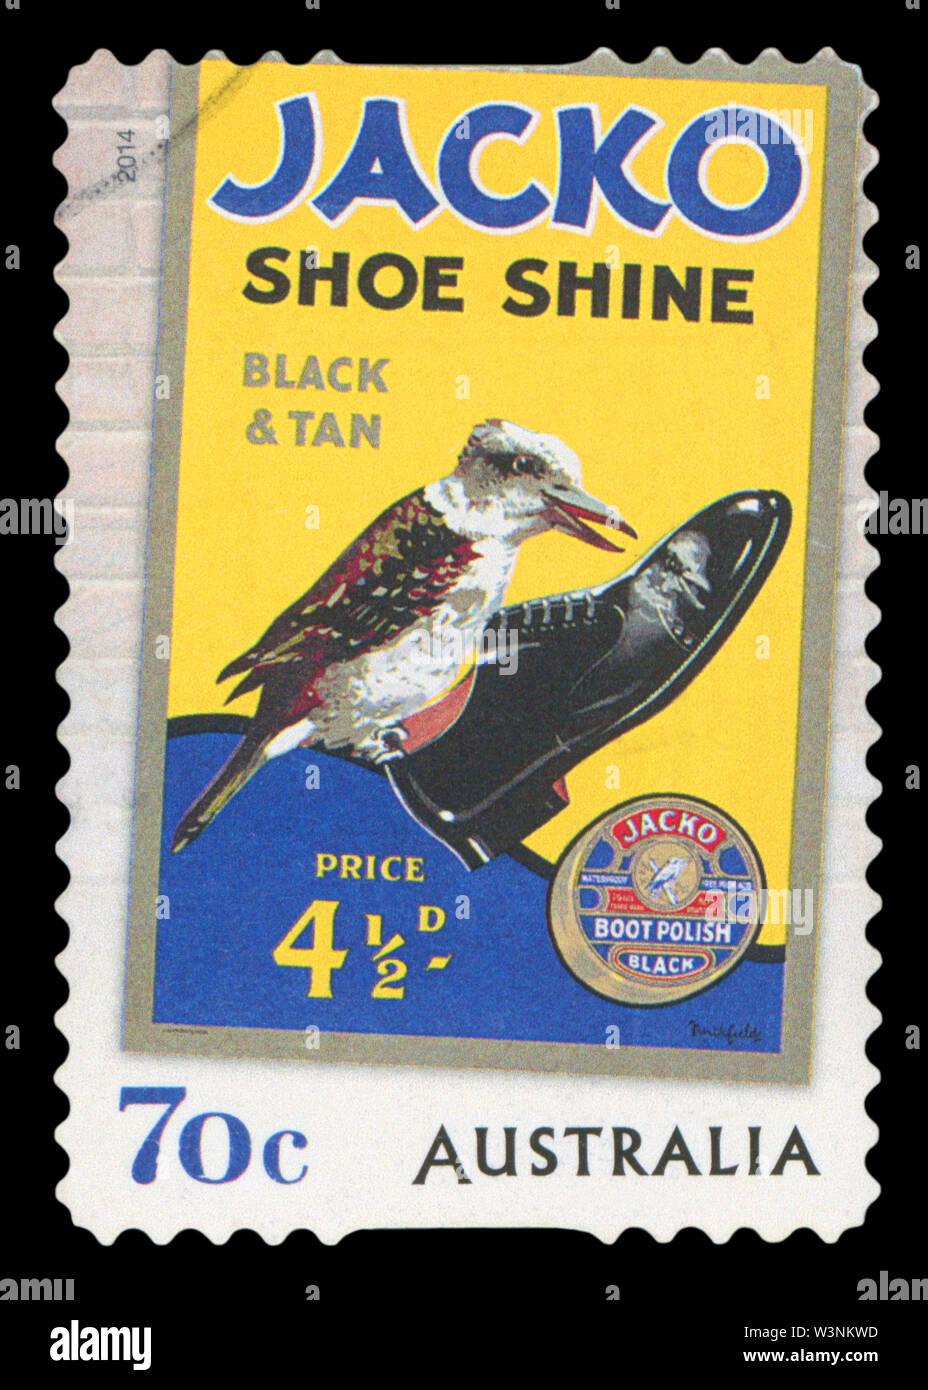 AUSTRALIA - CIRCA 2014: A Cancelled postage stamp from Australia illustrating old advertising of JACKO, Shoe Shine, Black &  Tan, circa 2014. Stock Photo